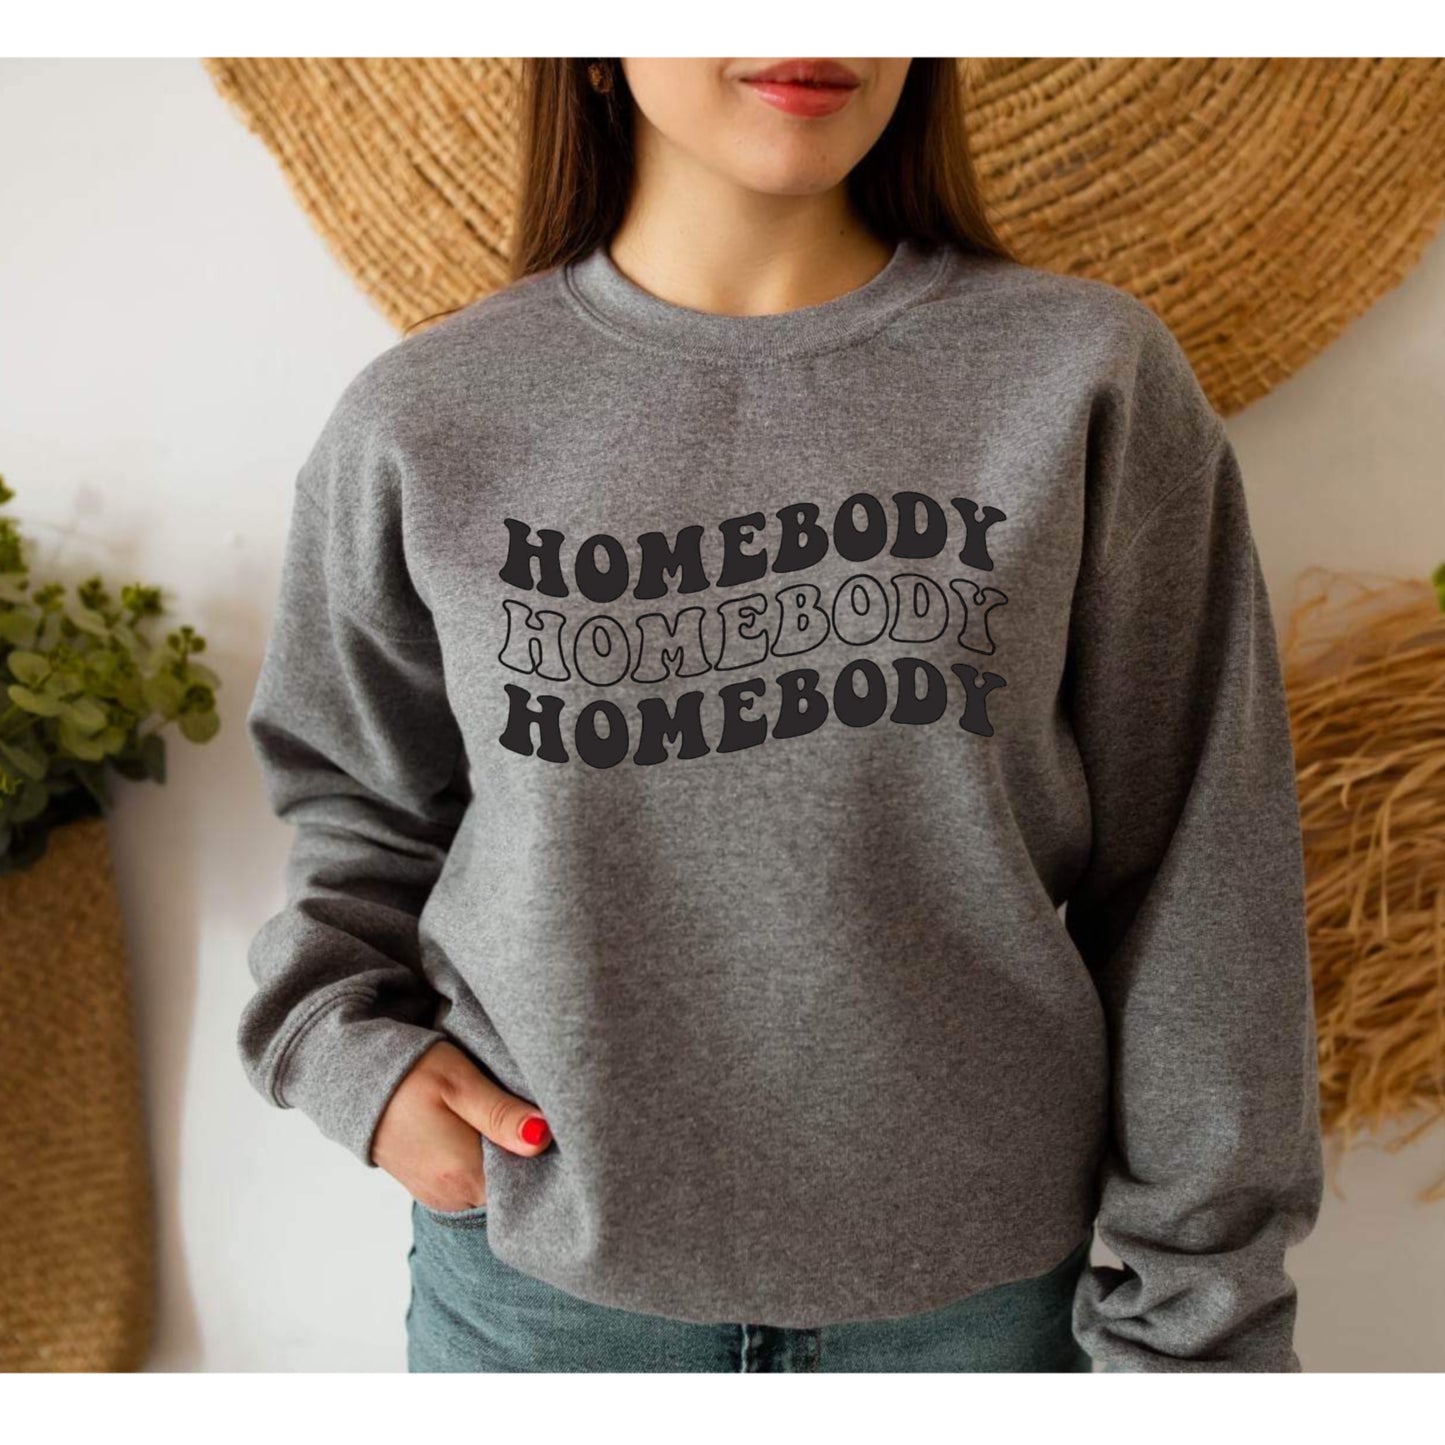 Homebody sweatshirt